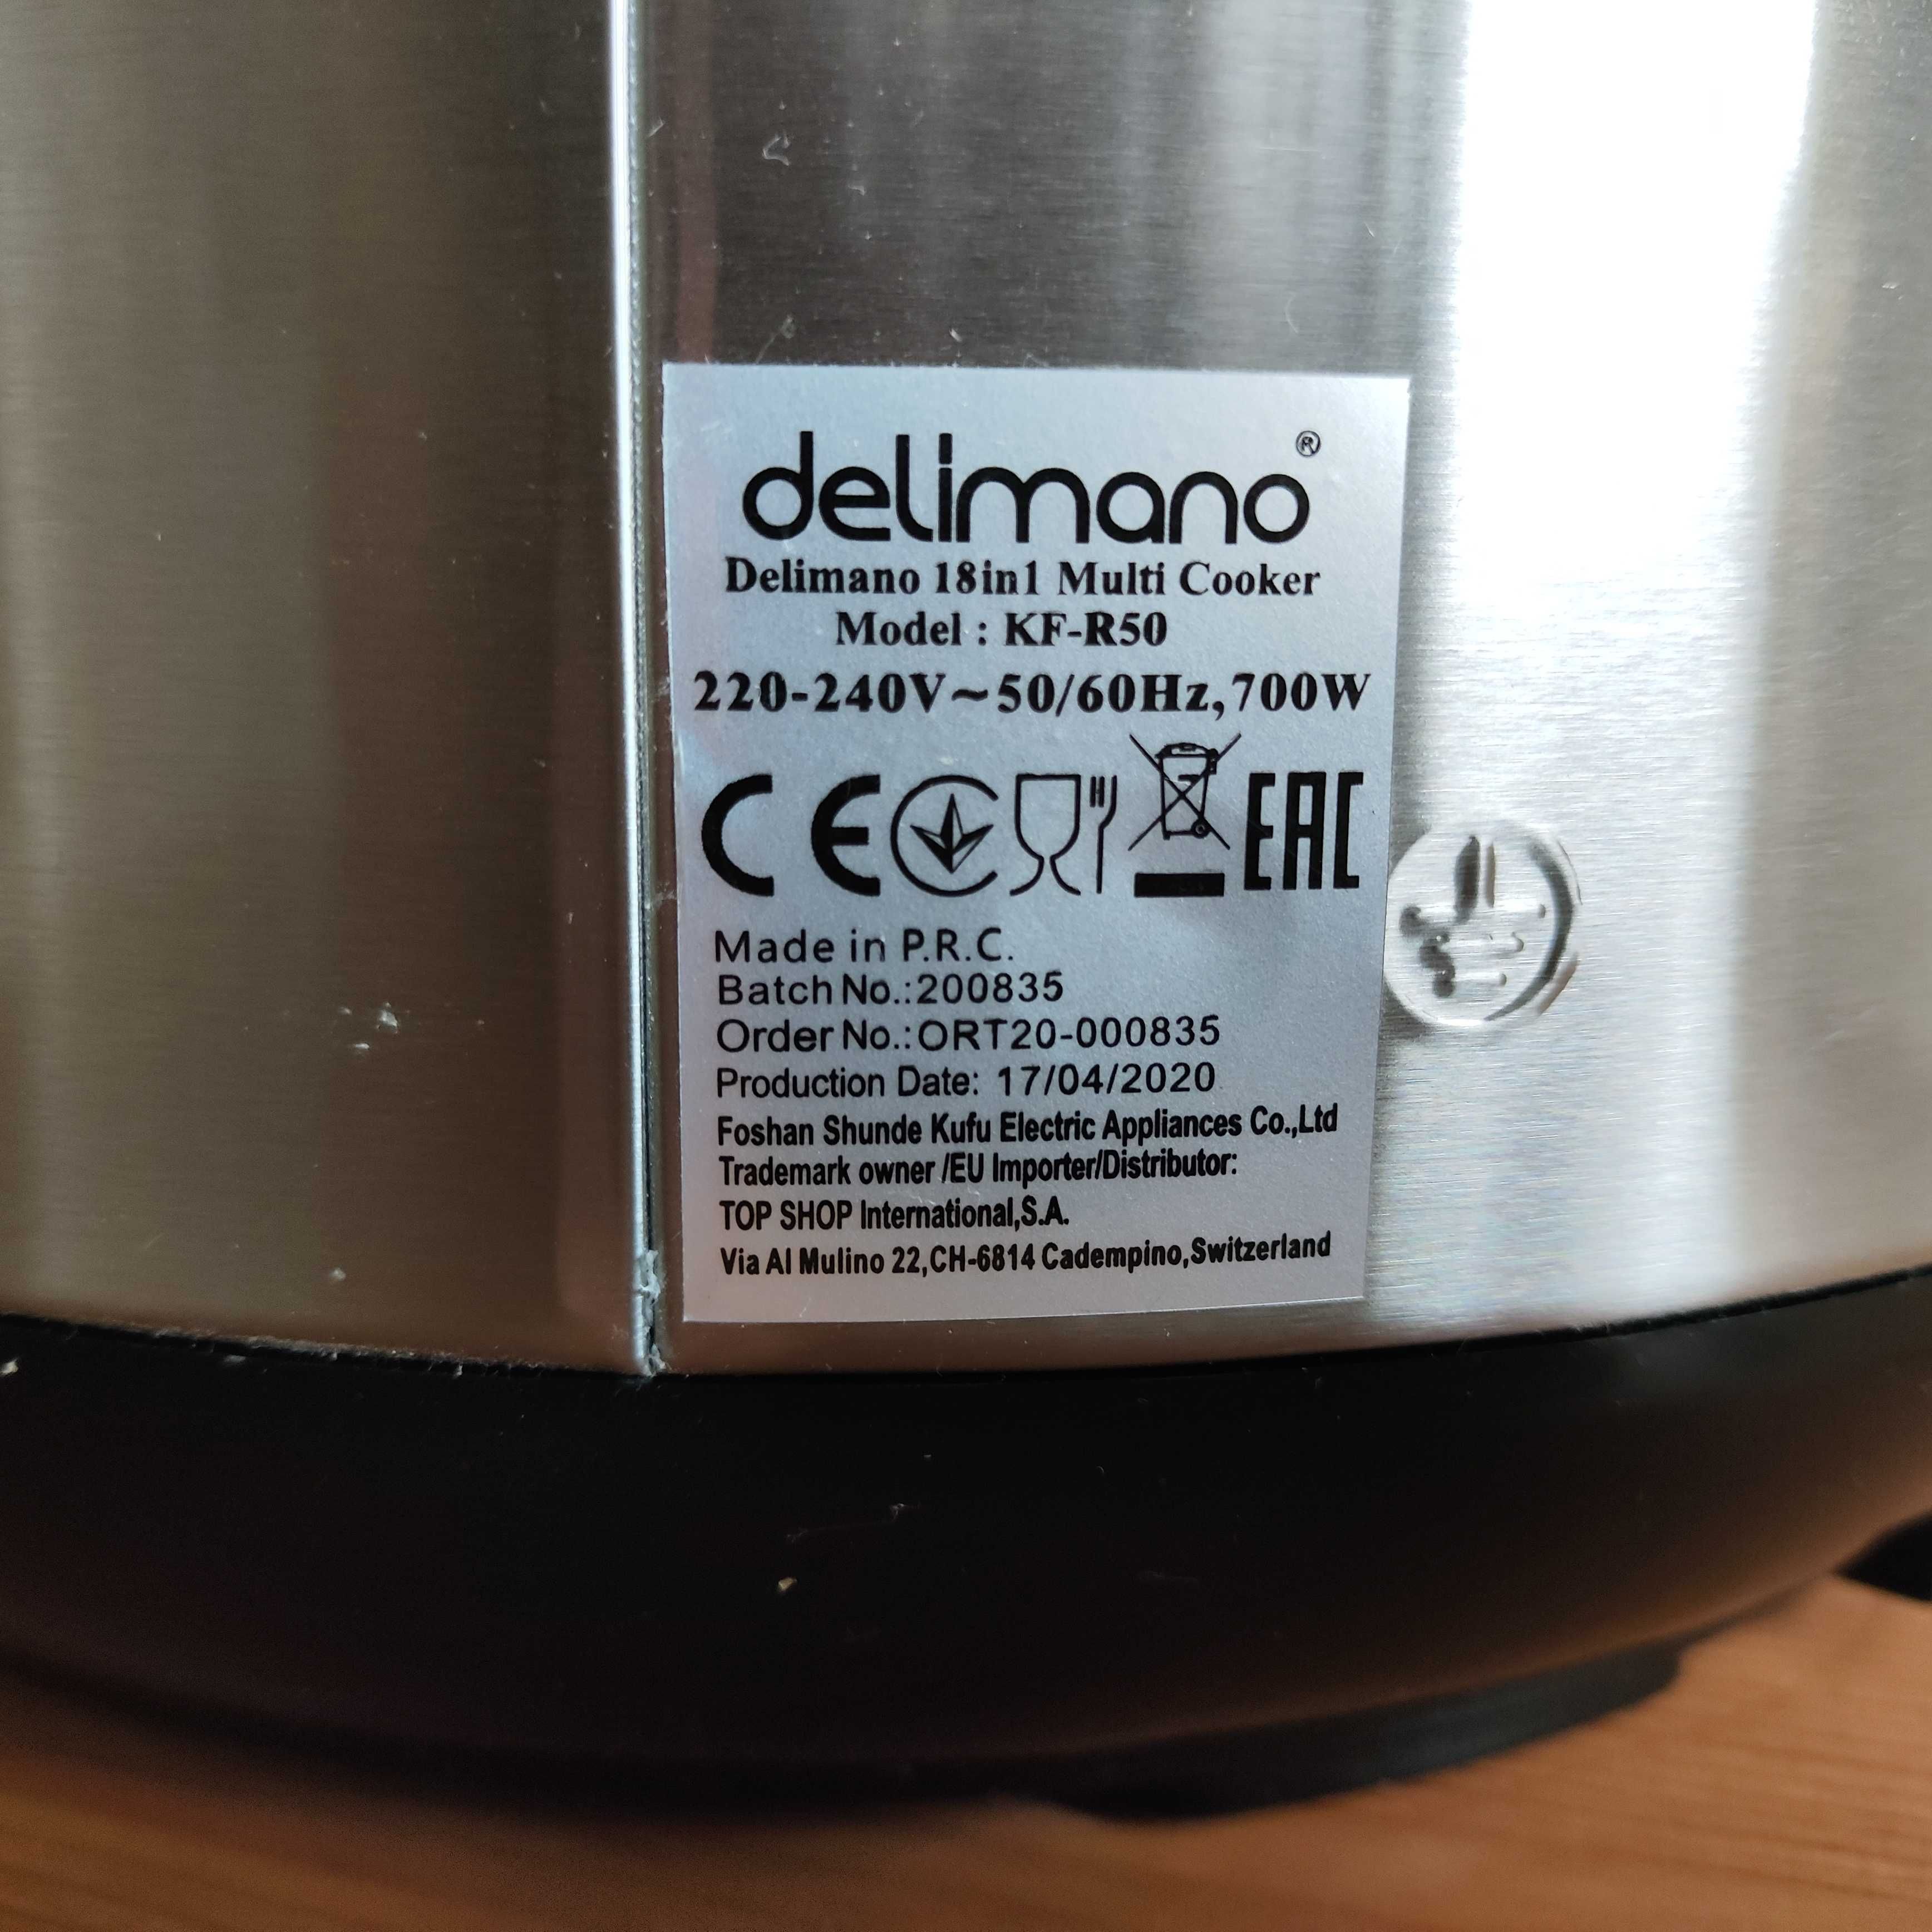 Delimano MultiCooker 18w1